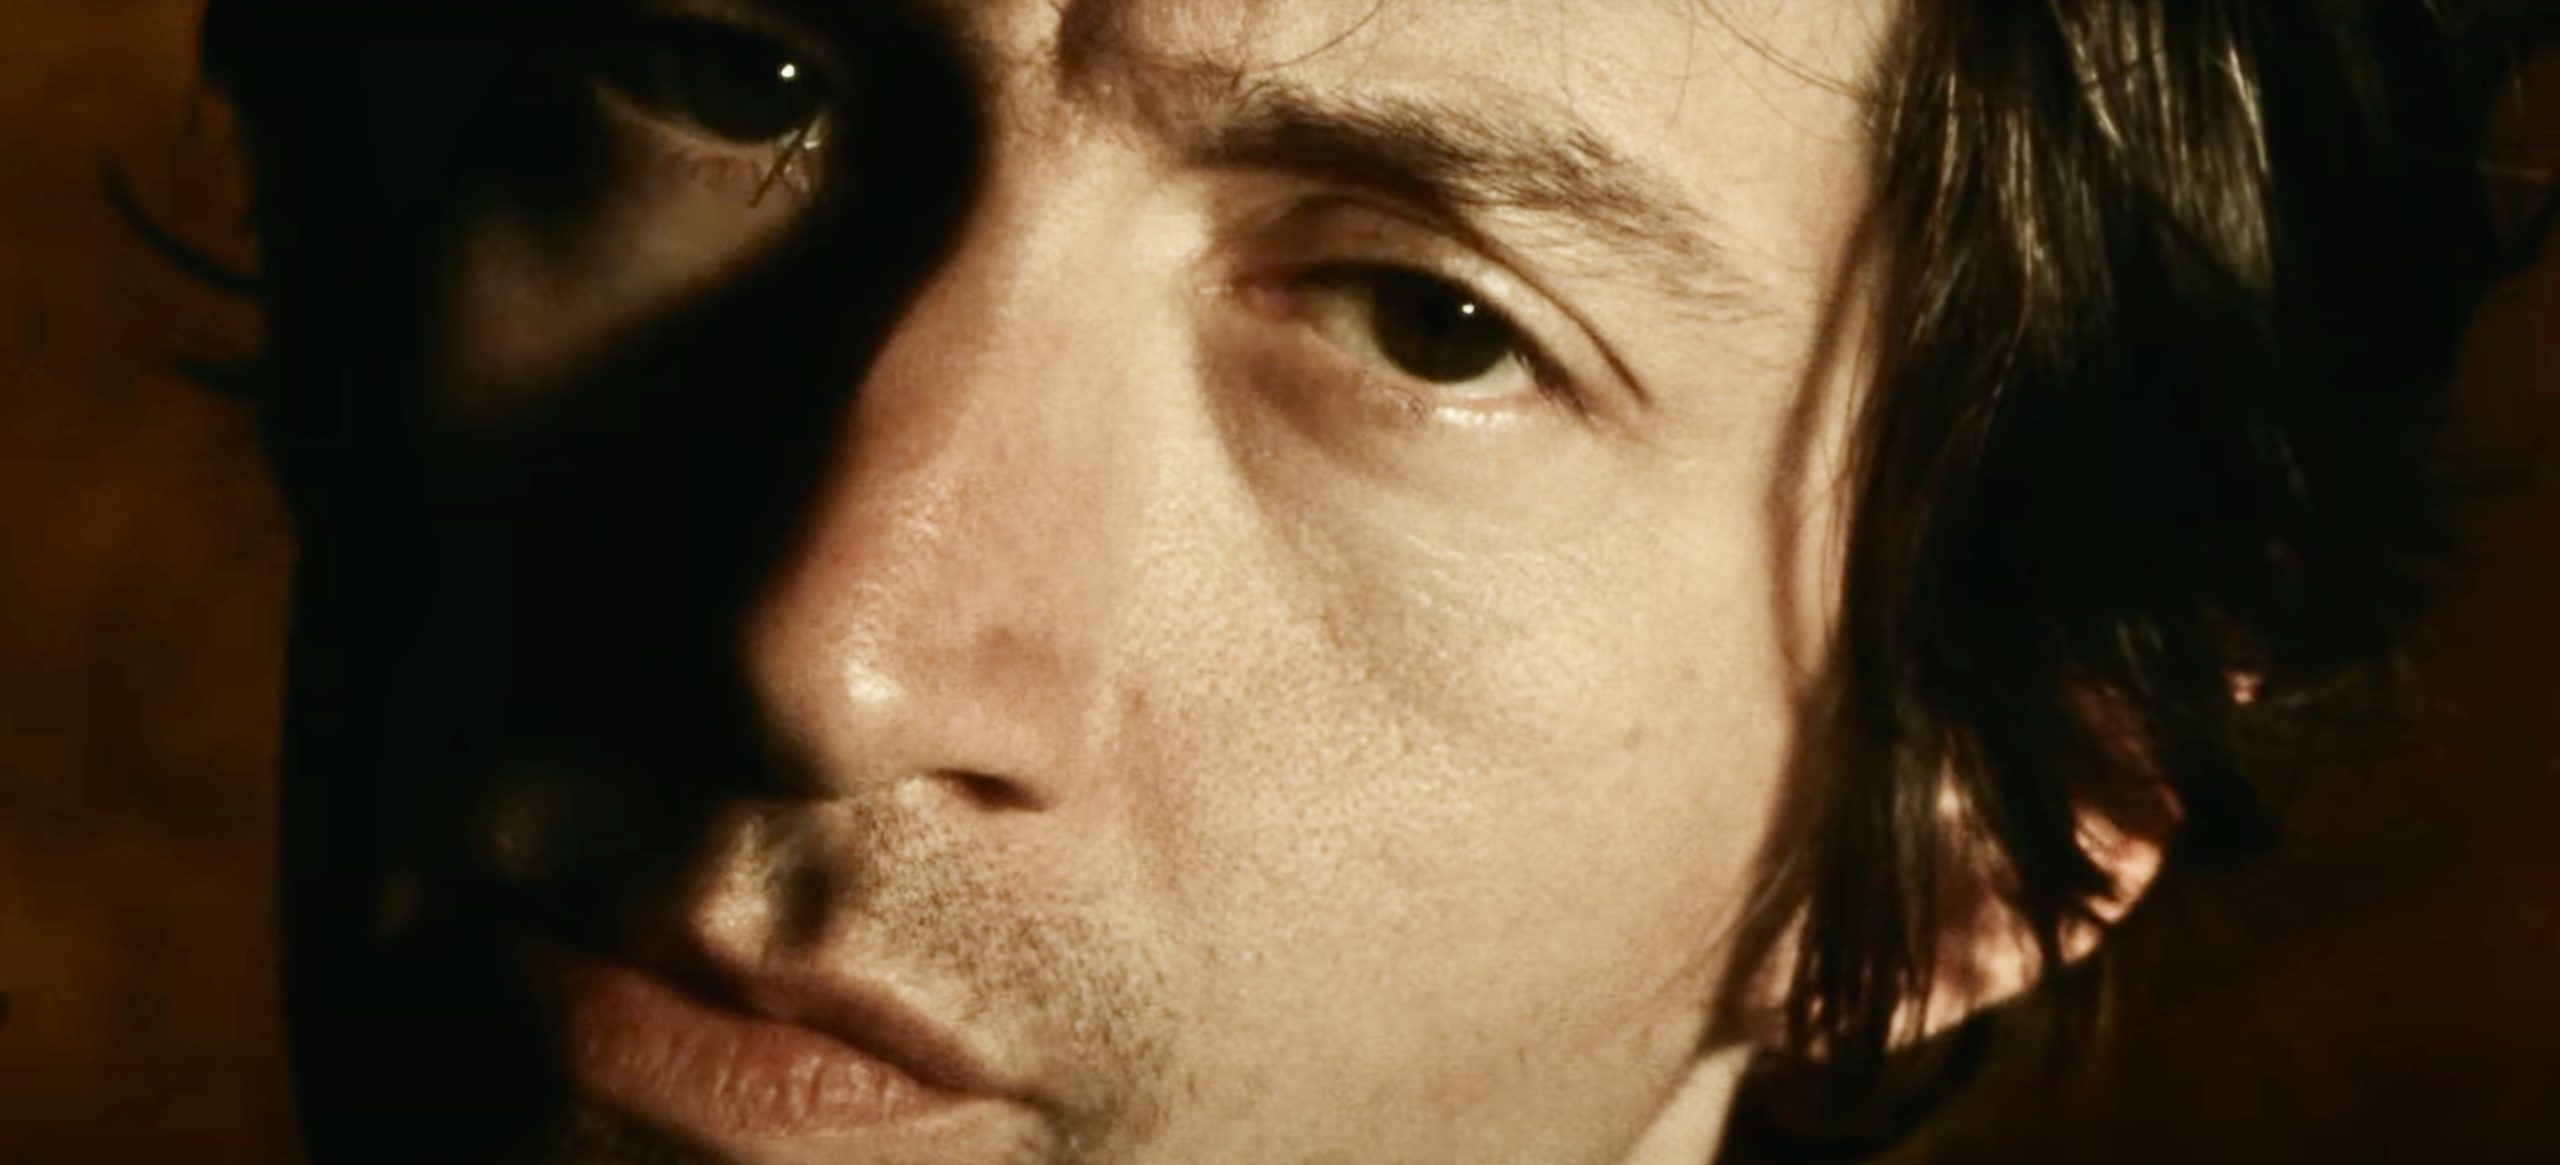 “There’d Better Be A Mirrorball” – Το νέο τραγούδι των Arctic Monkeys είναι απλά υπέροχο (video)